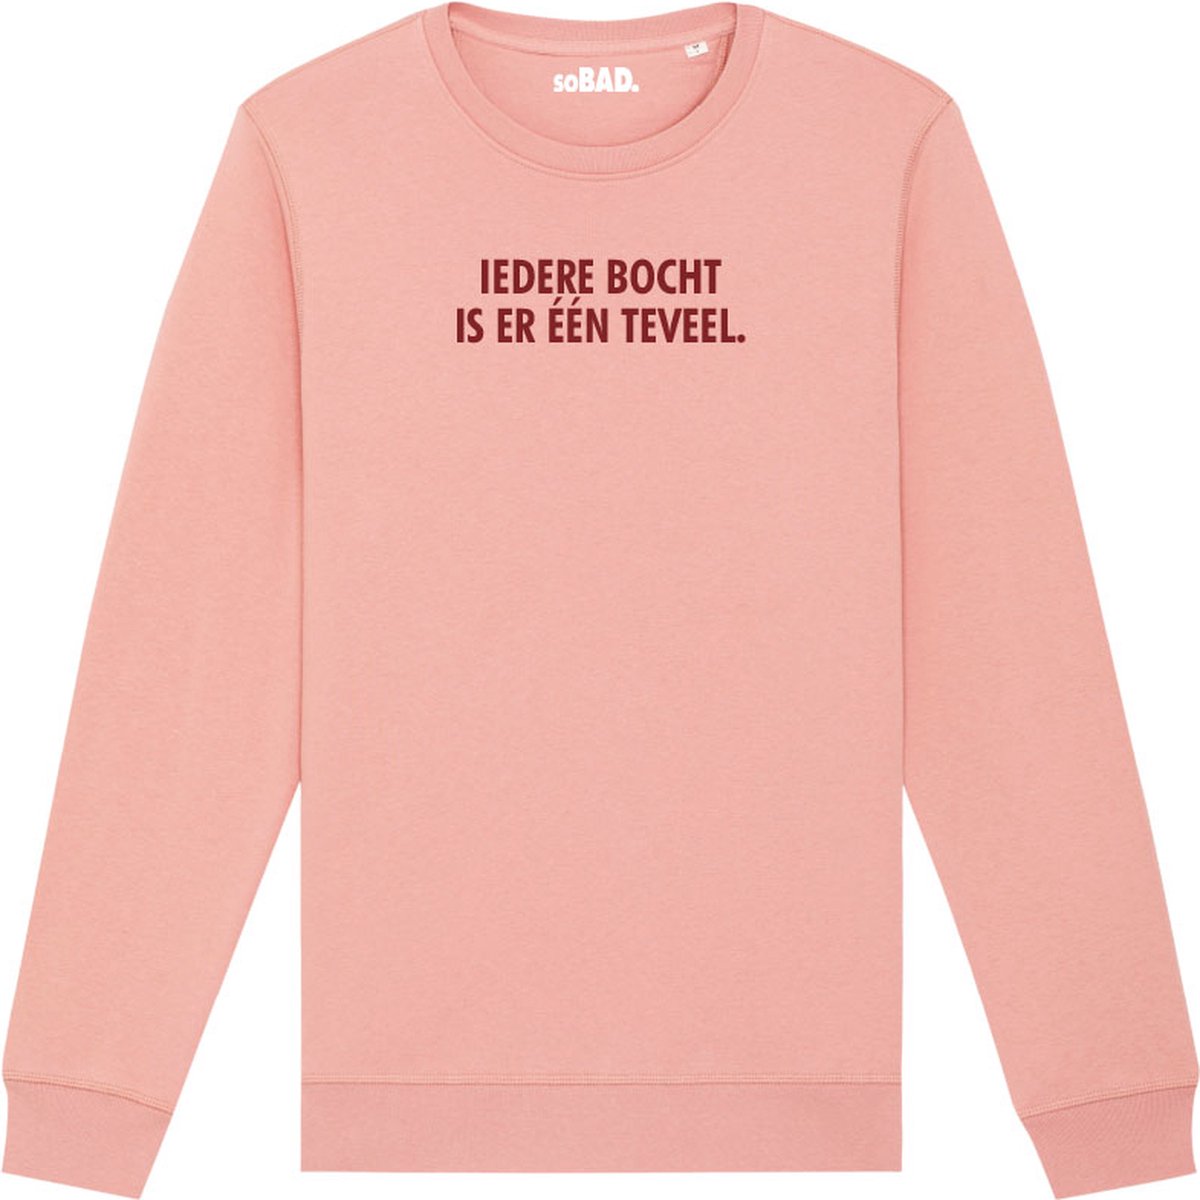 Wintersport sweater canyon pink XL - Iedere bocht is er één teveel - soBAD. | Foute apres ski outfit | kleding | verkleedkleren | wintersporttruien | wintersport dames en heren